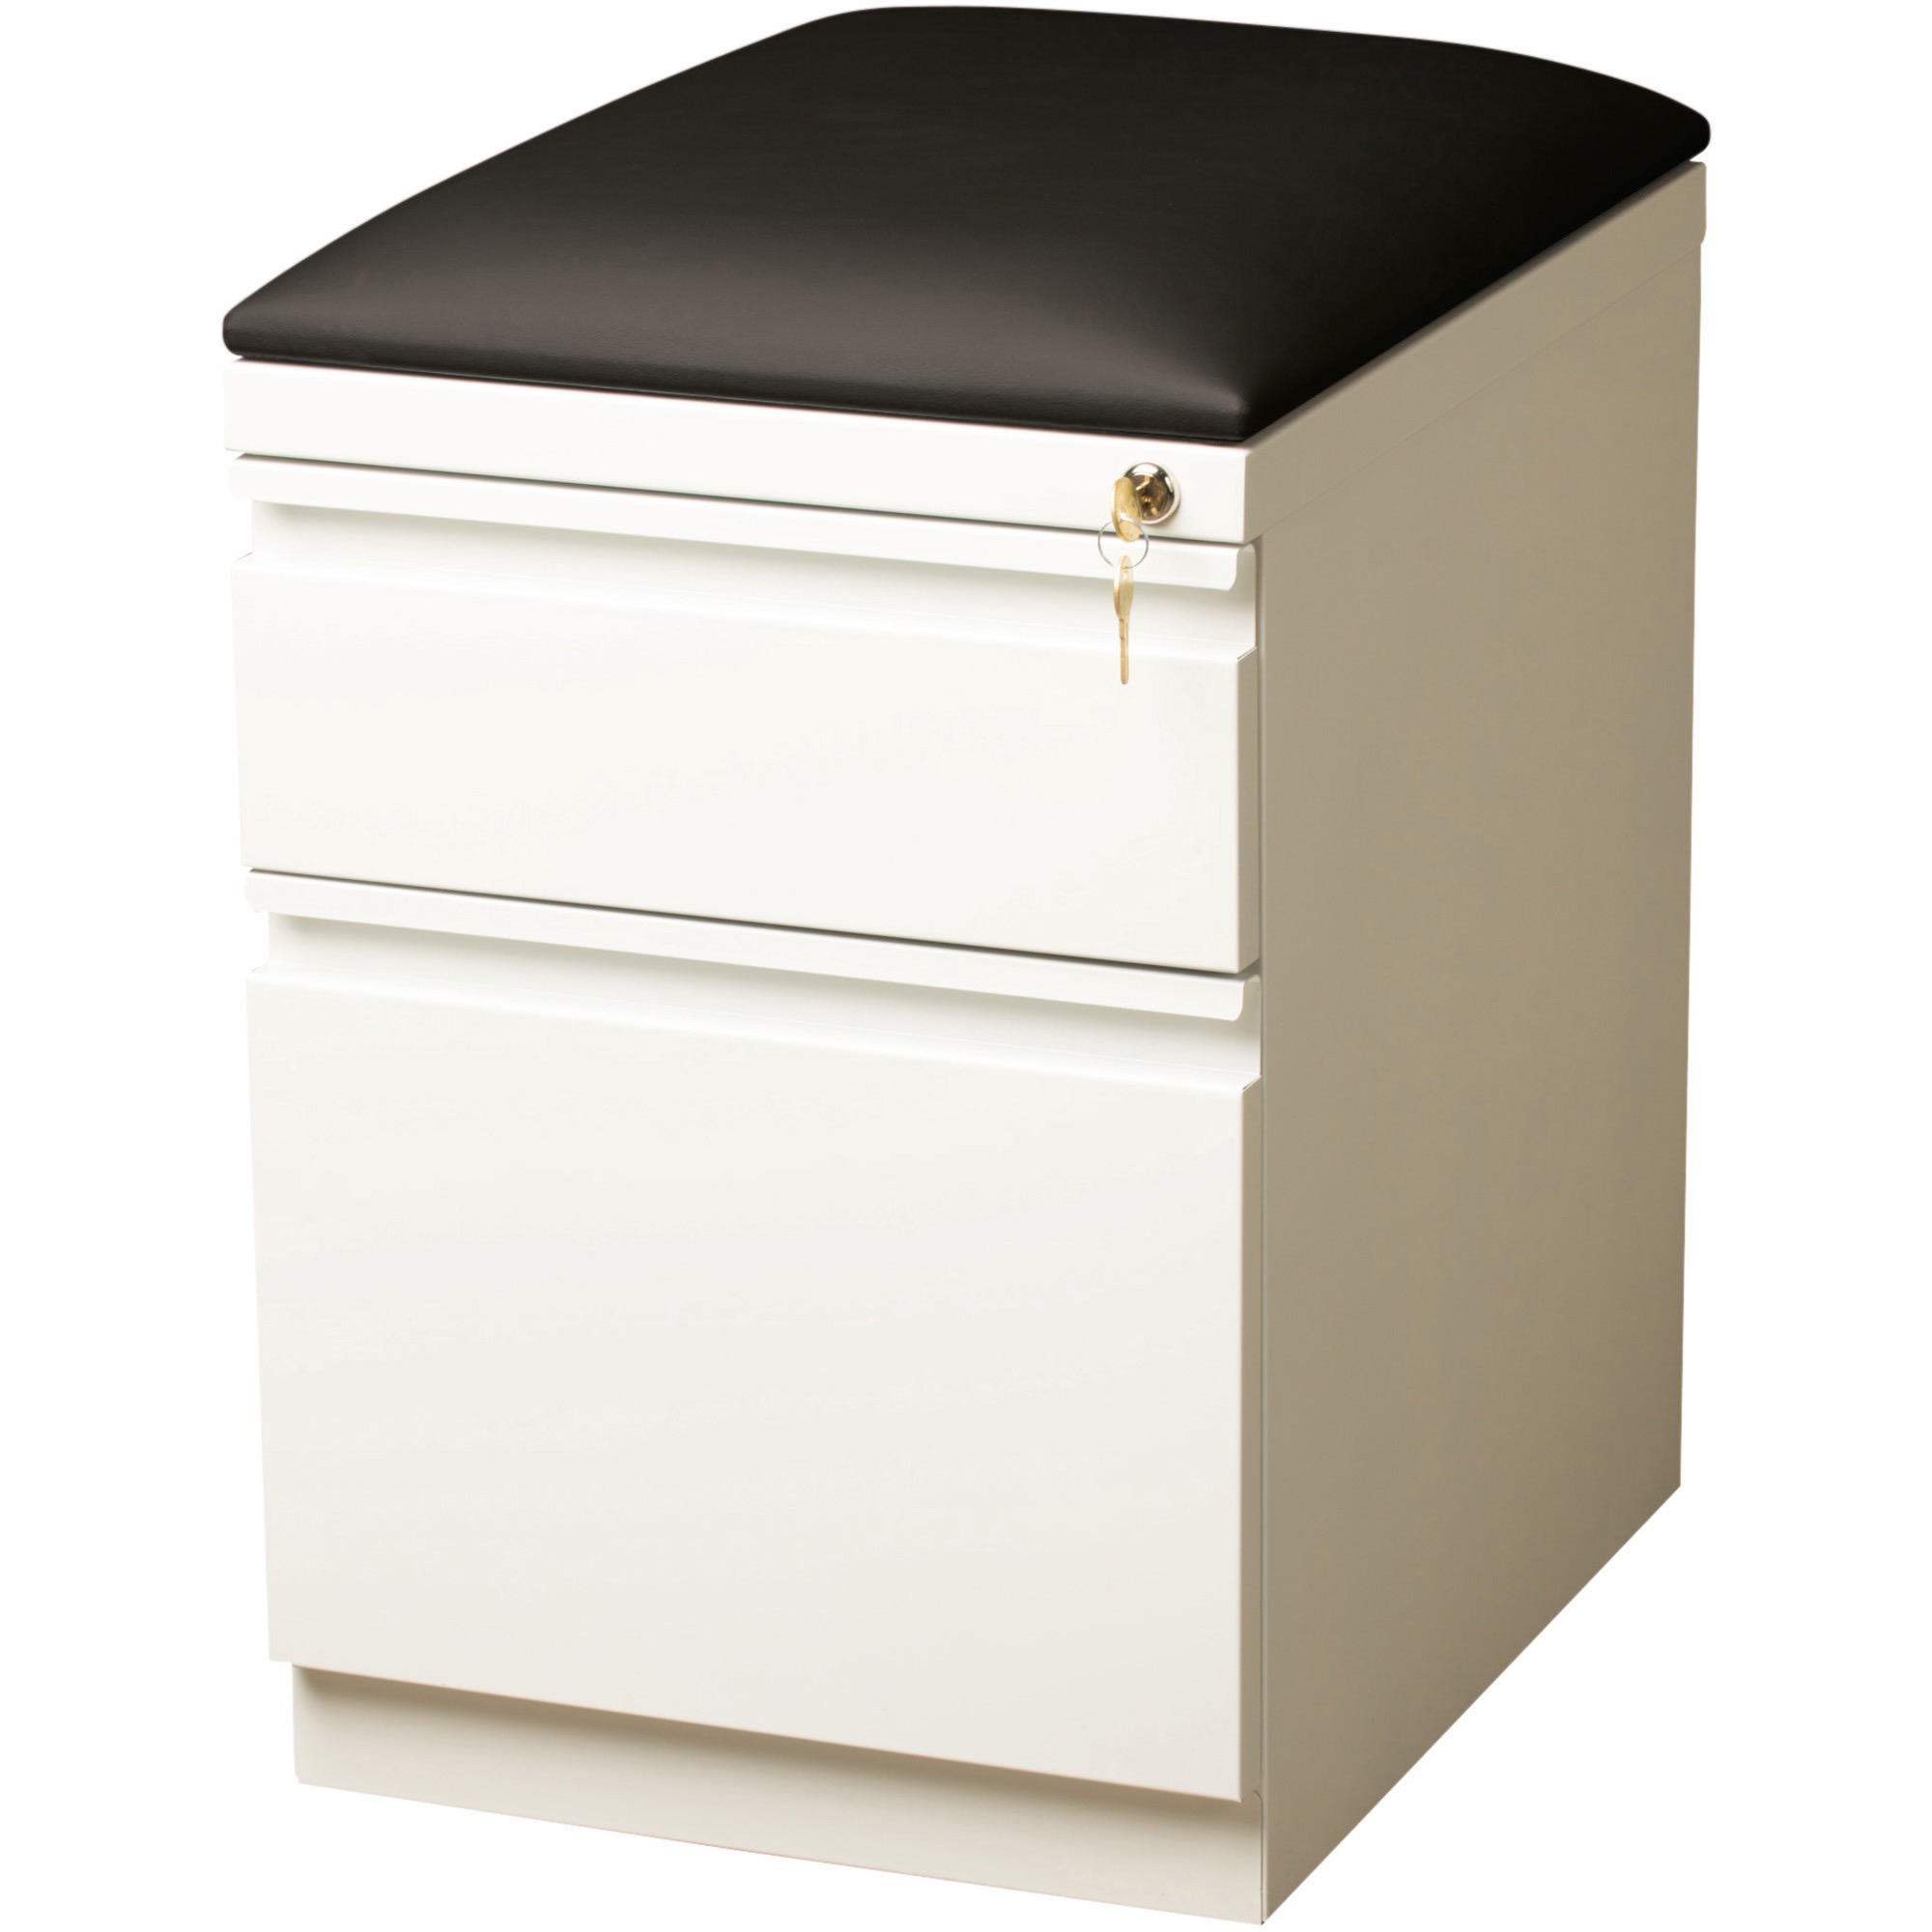 Lorell Mobile Pedestal File 2 Drawer 15" x 19.9" x 23.8" - 2 x Drawer(s) Box 305.50 lb Load Capacity - image 3 of 5